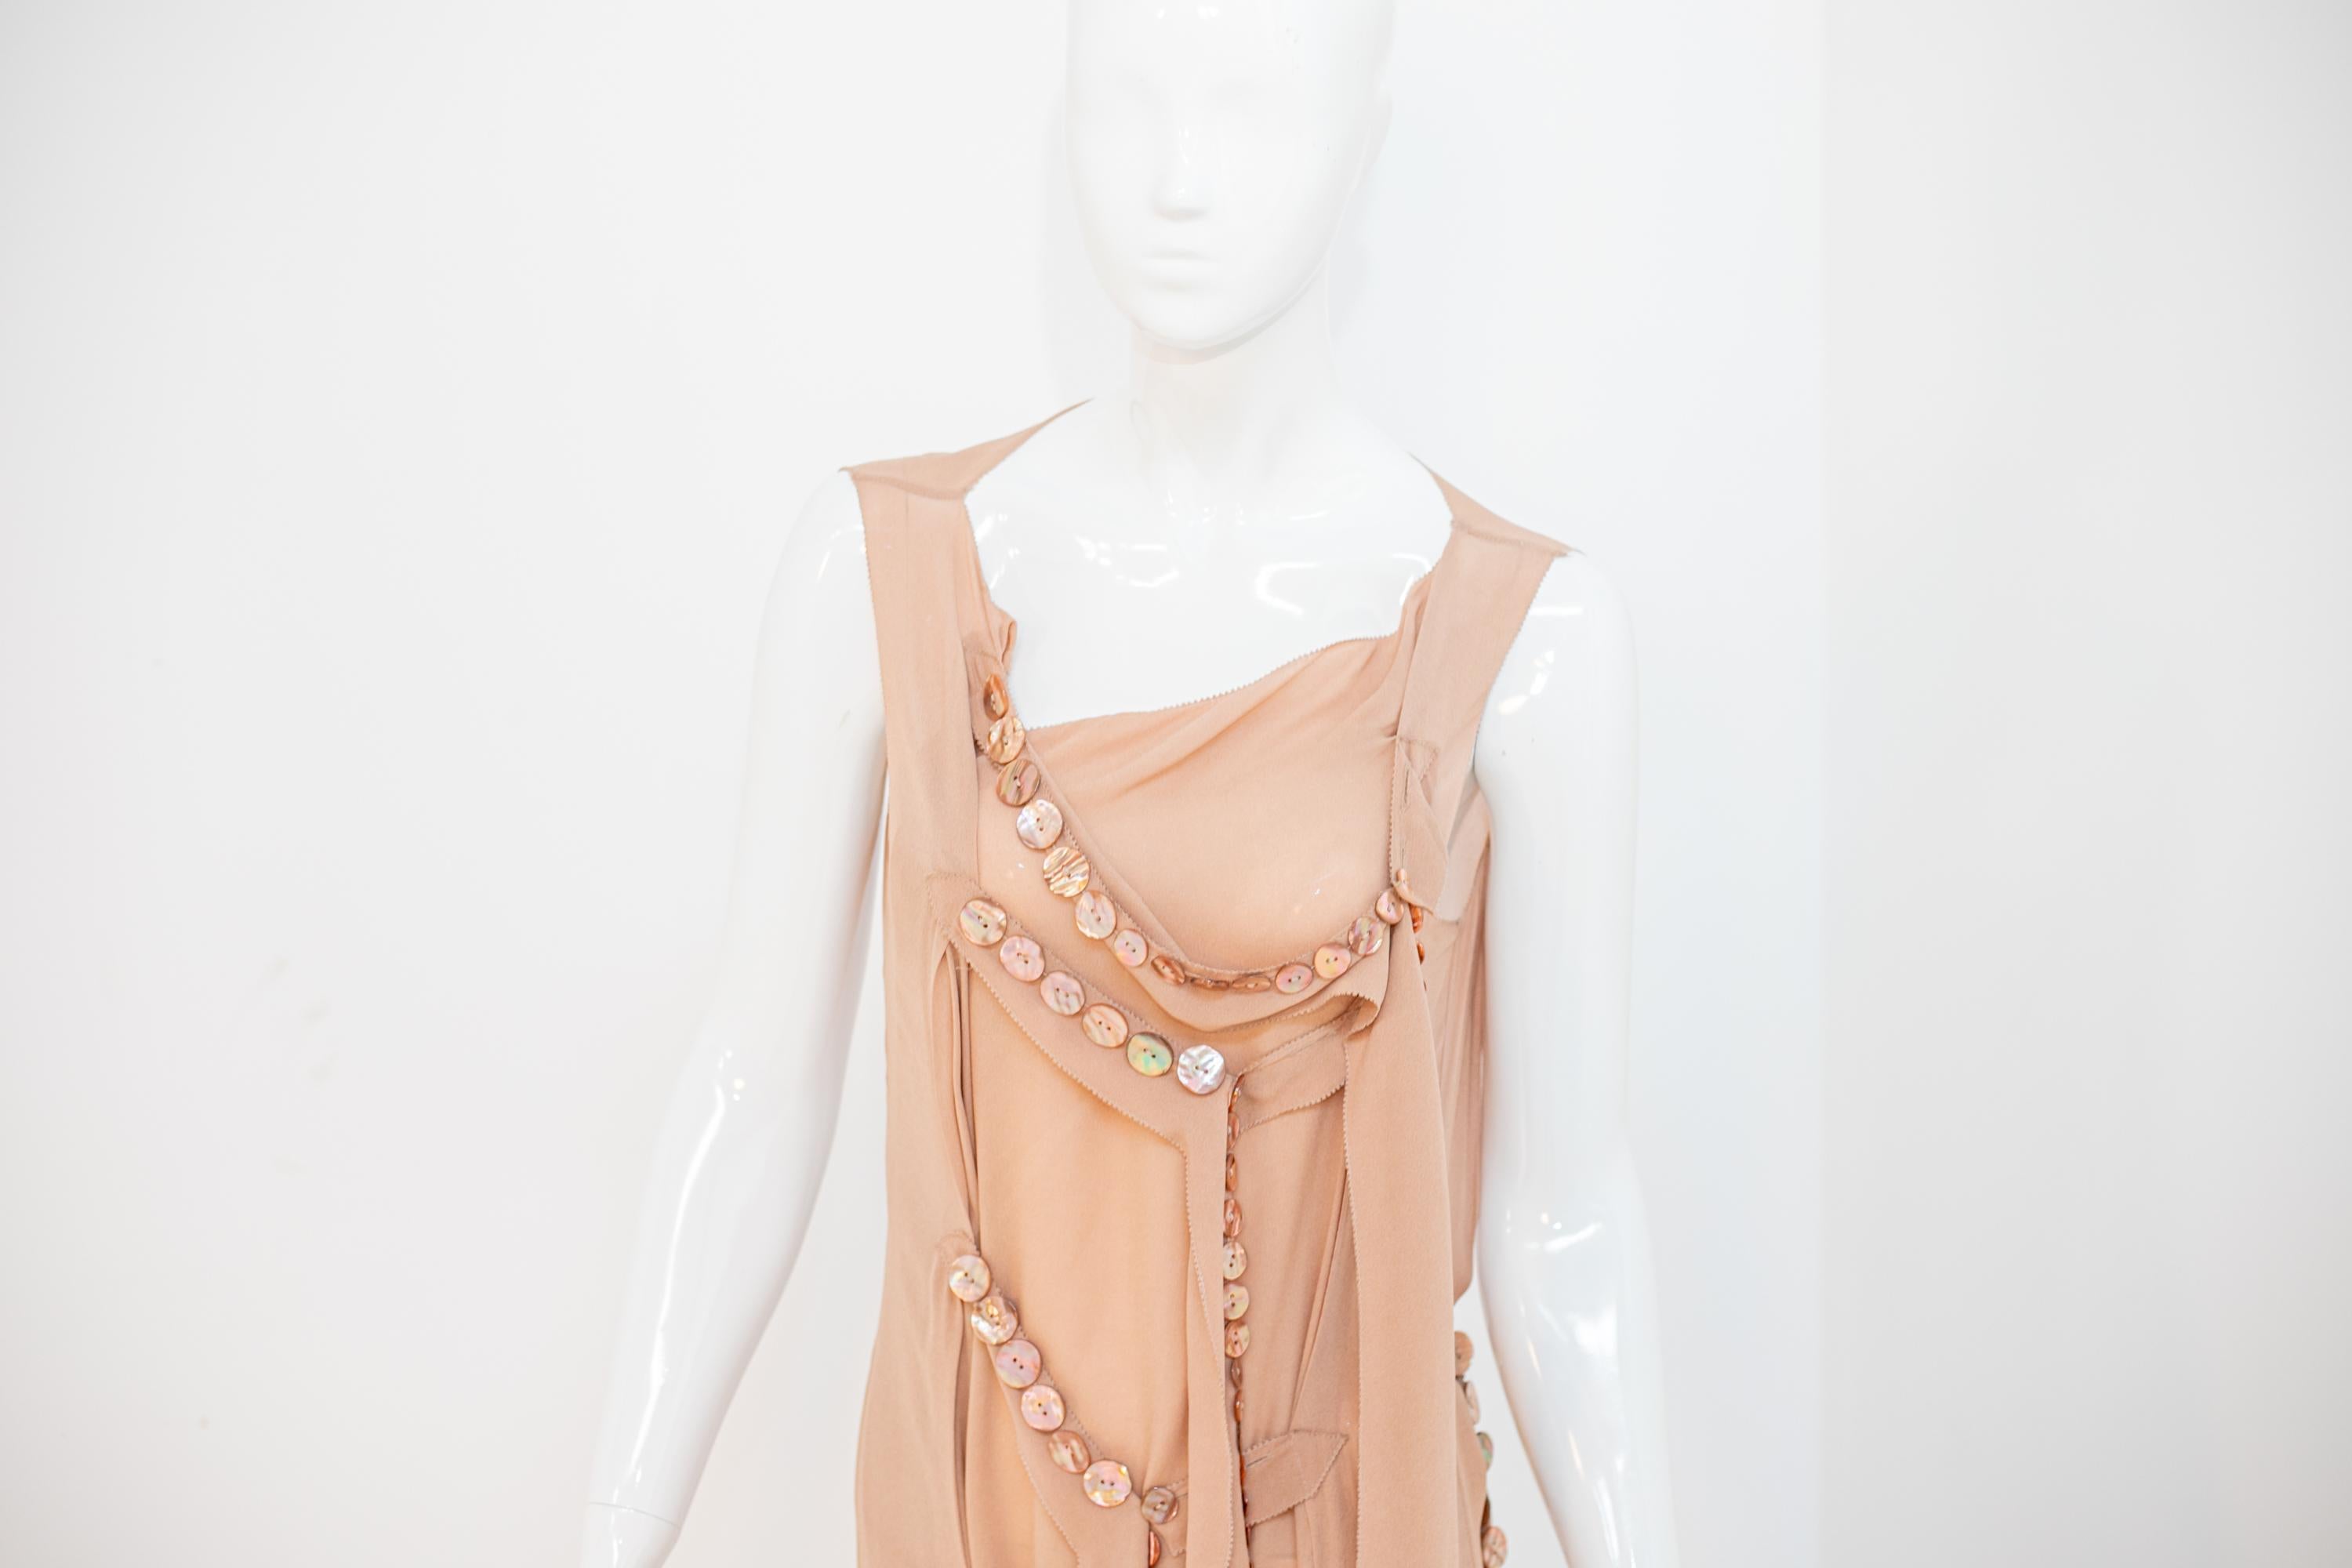 Jean Paul Gaultier Rare Evening Dress with Decorative Jewels For Sale 1